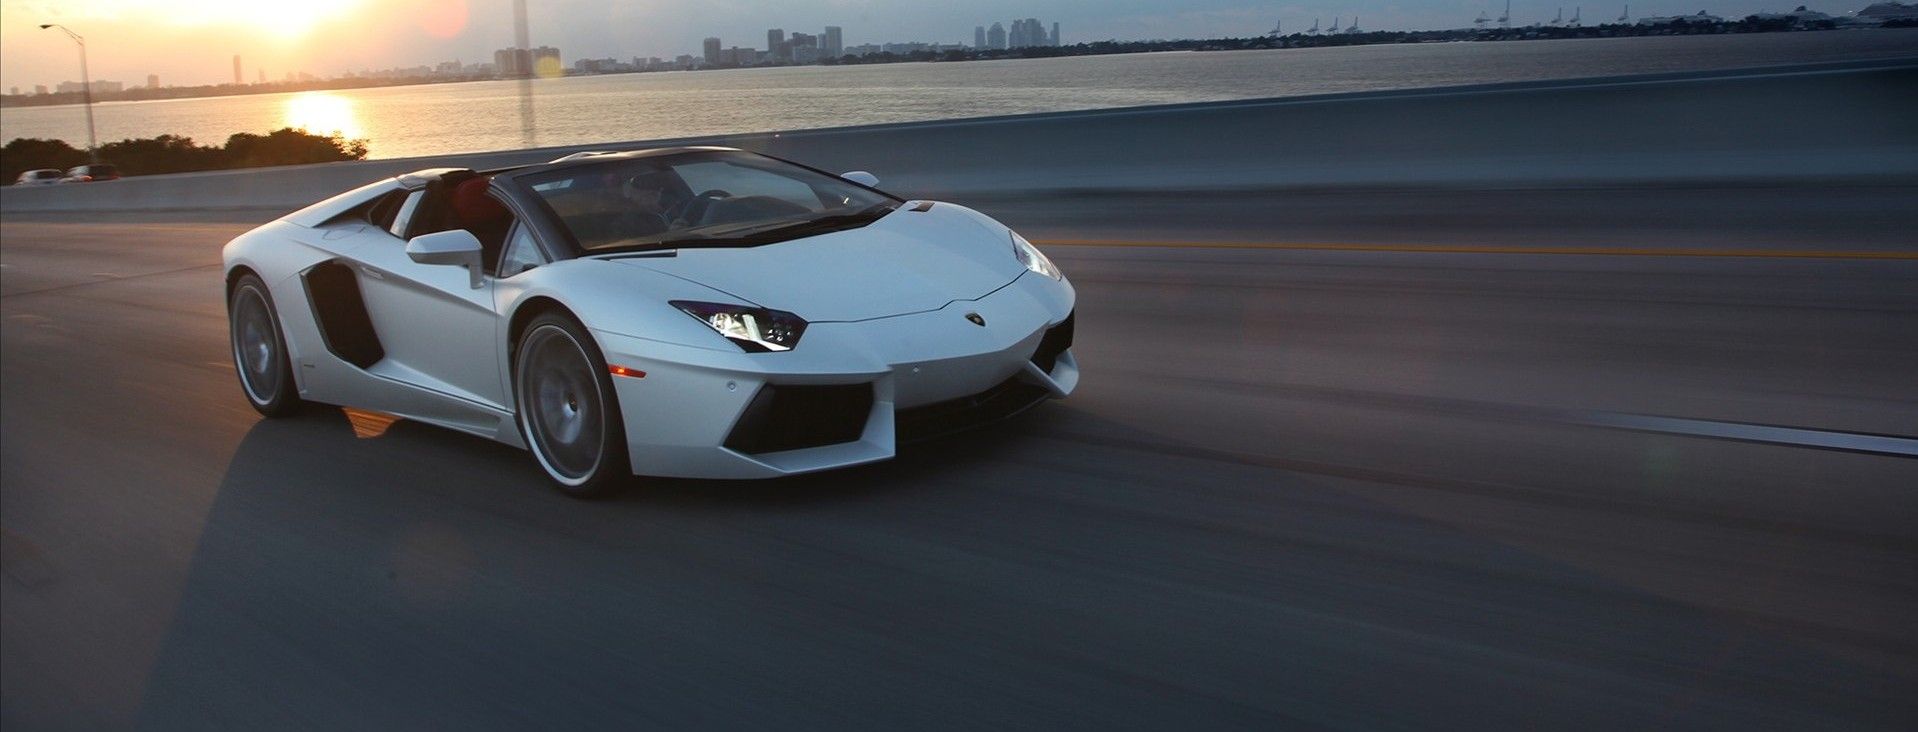 Lamborghini Rental Miami